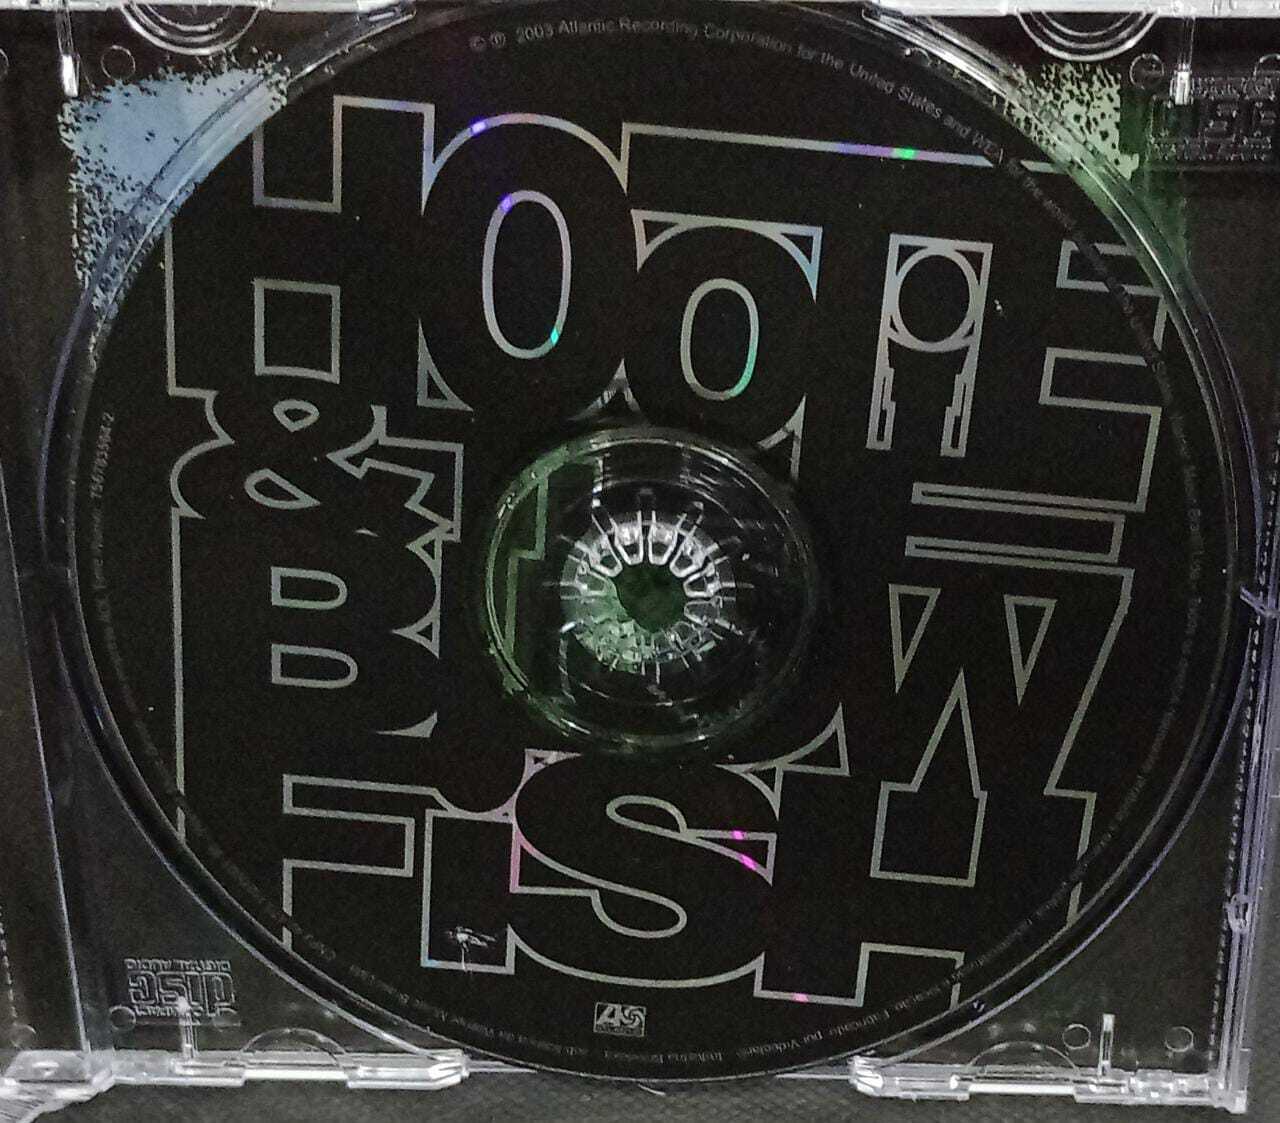 CD - Hootie & The Blowfish - 2003